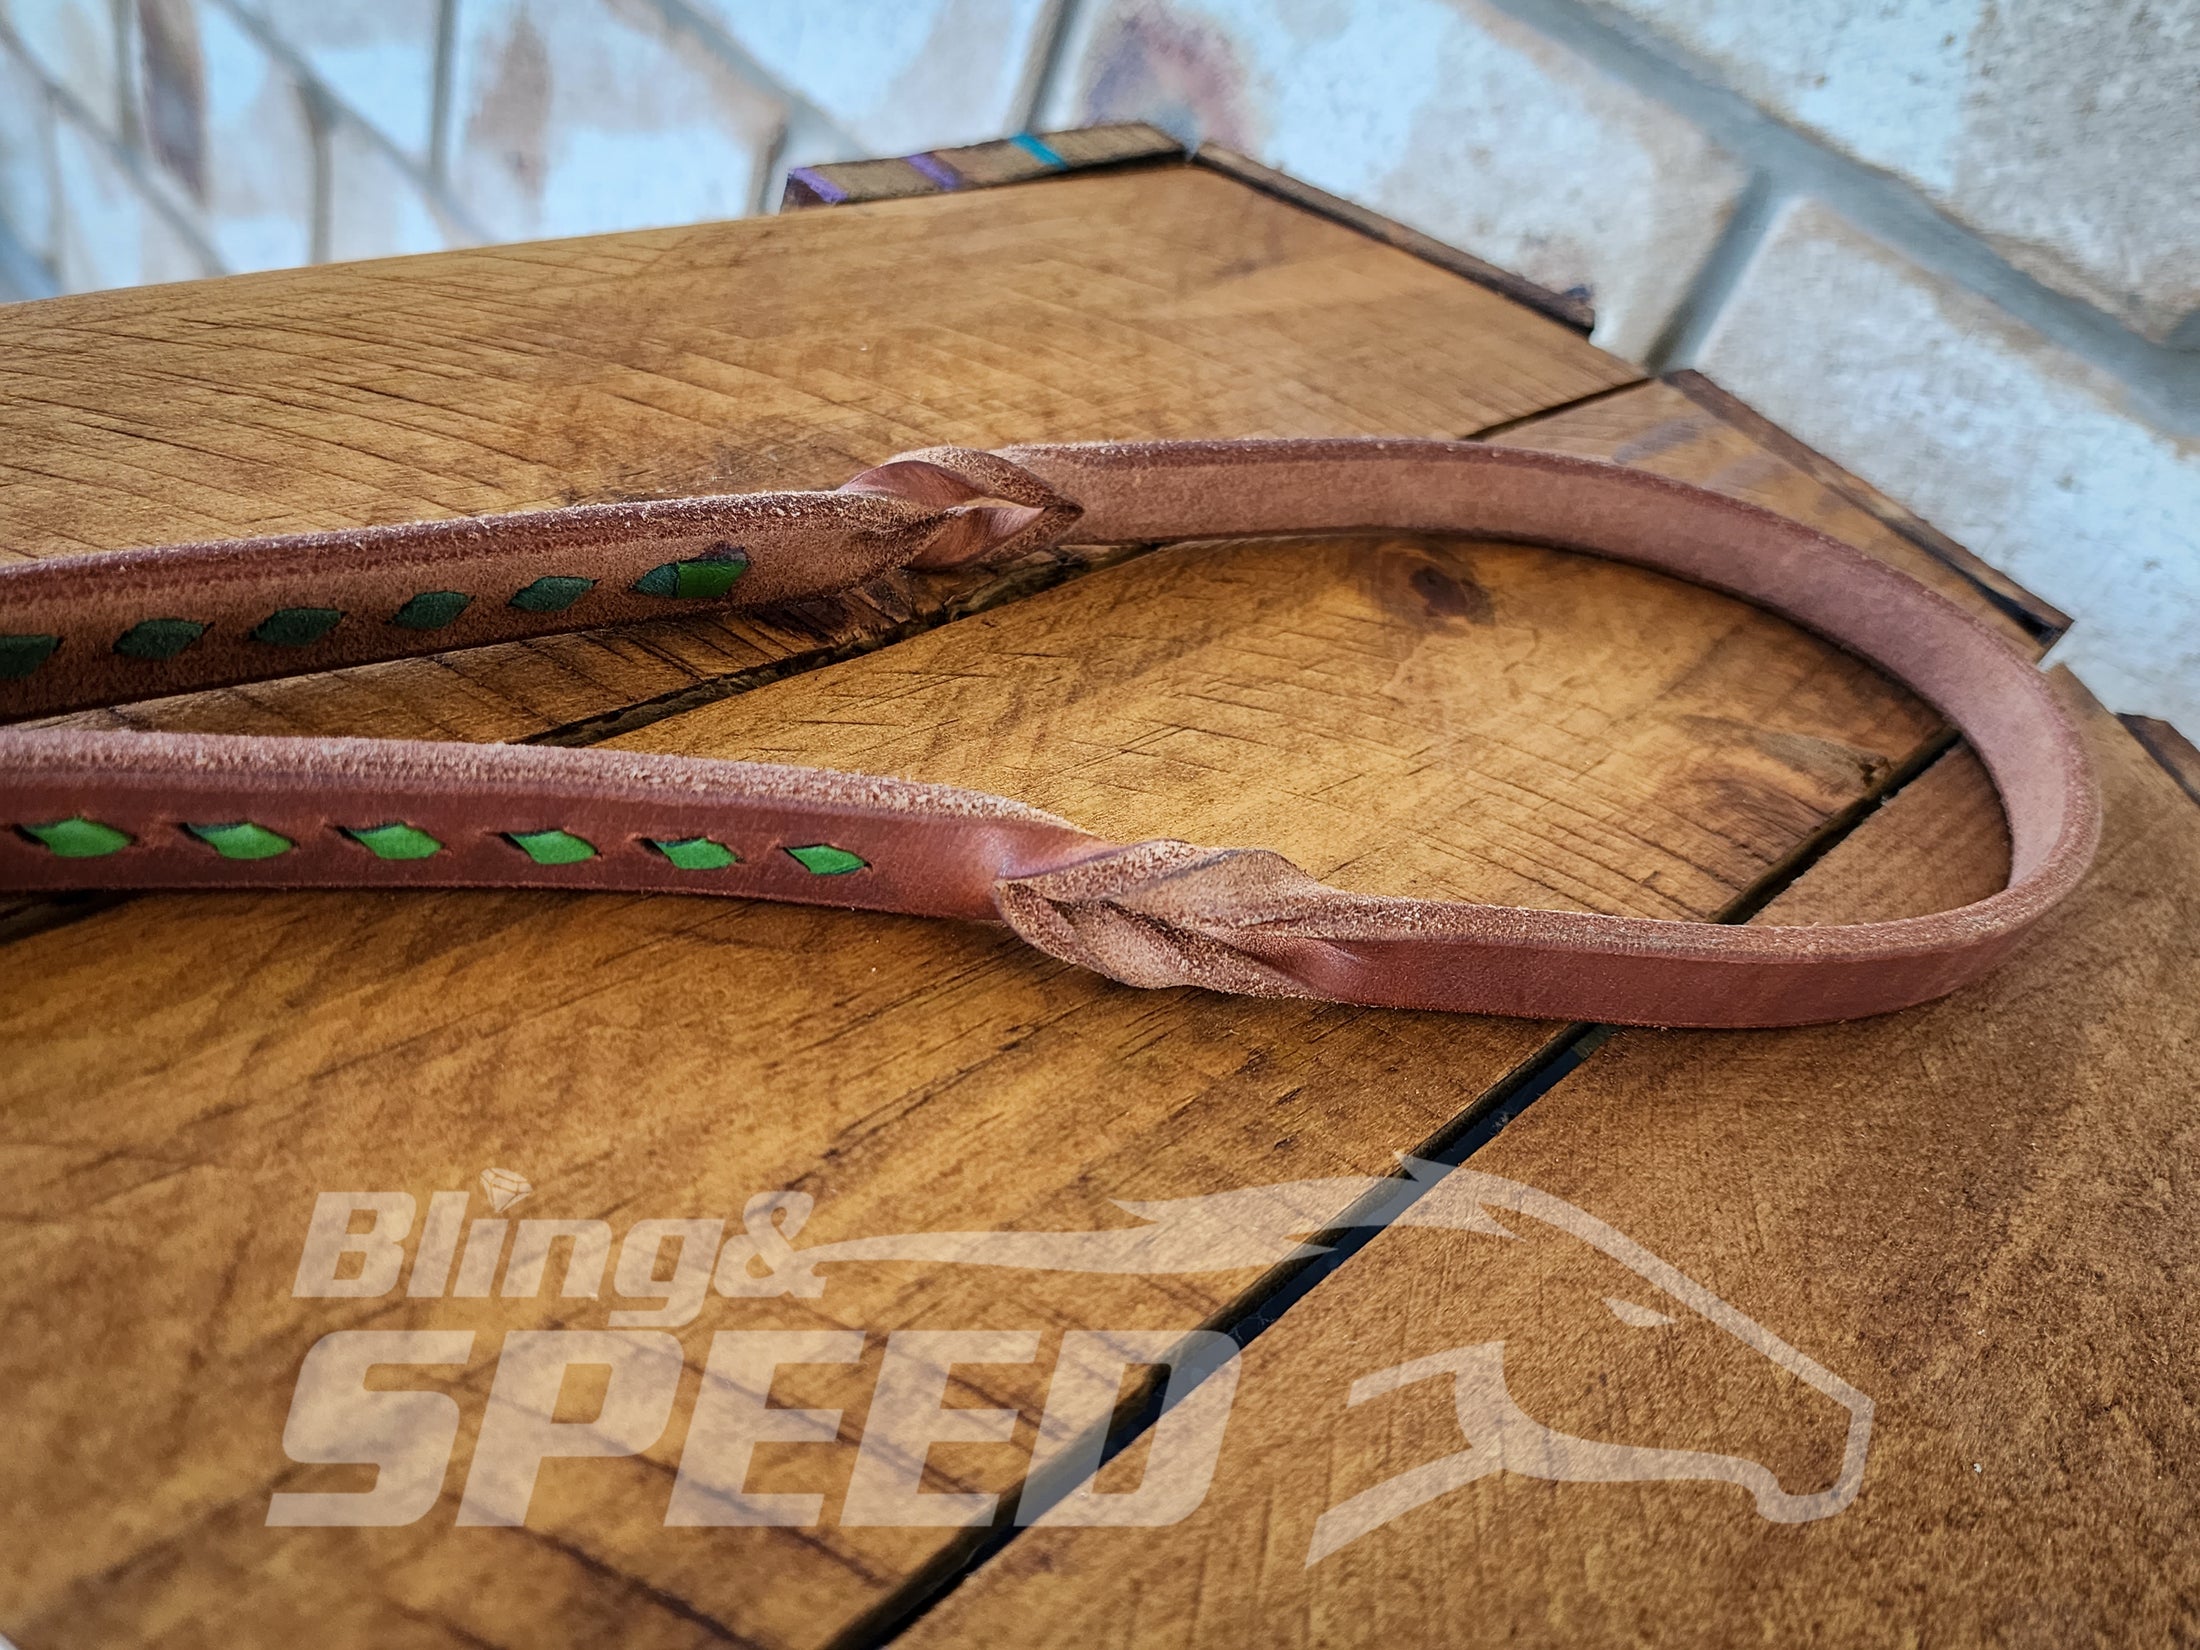 Bling & Speed Twisted Bloodknot Buckstitched Barrel Reins - Green (7977757376750)